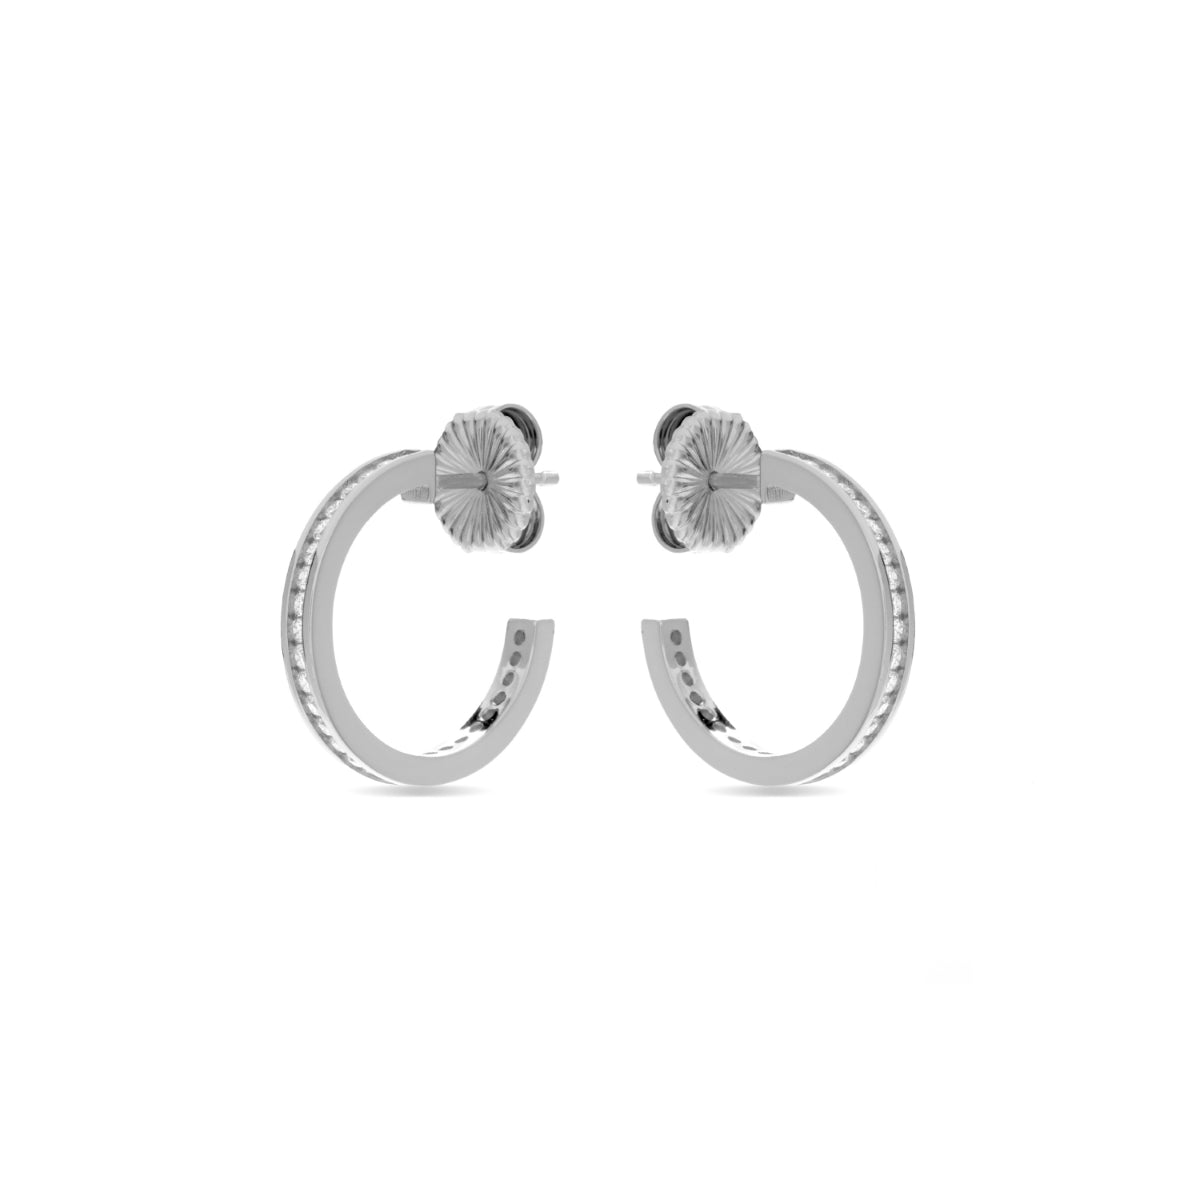 Taamir Earrings 925 Sterling Silver